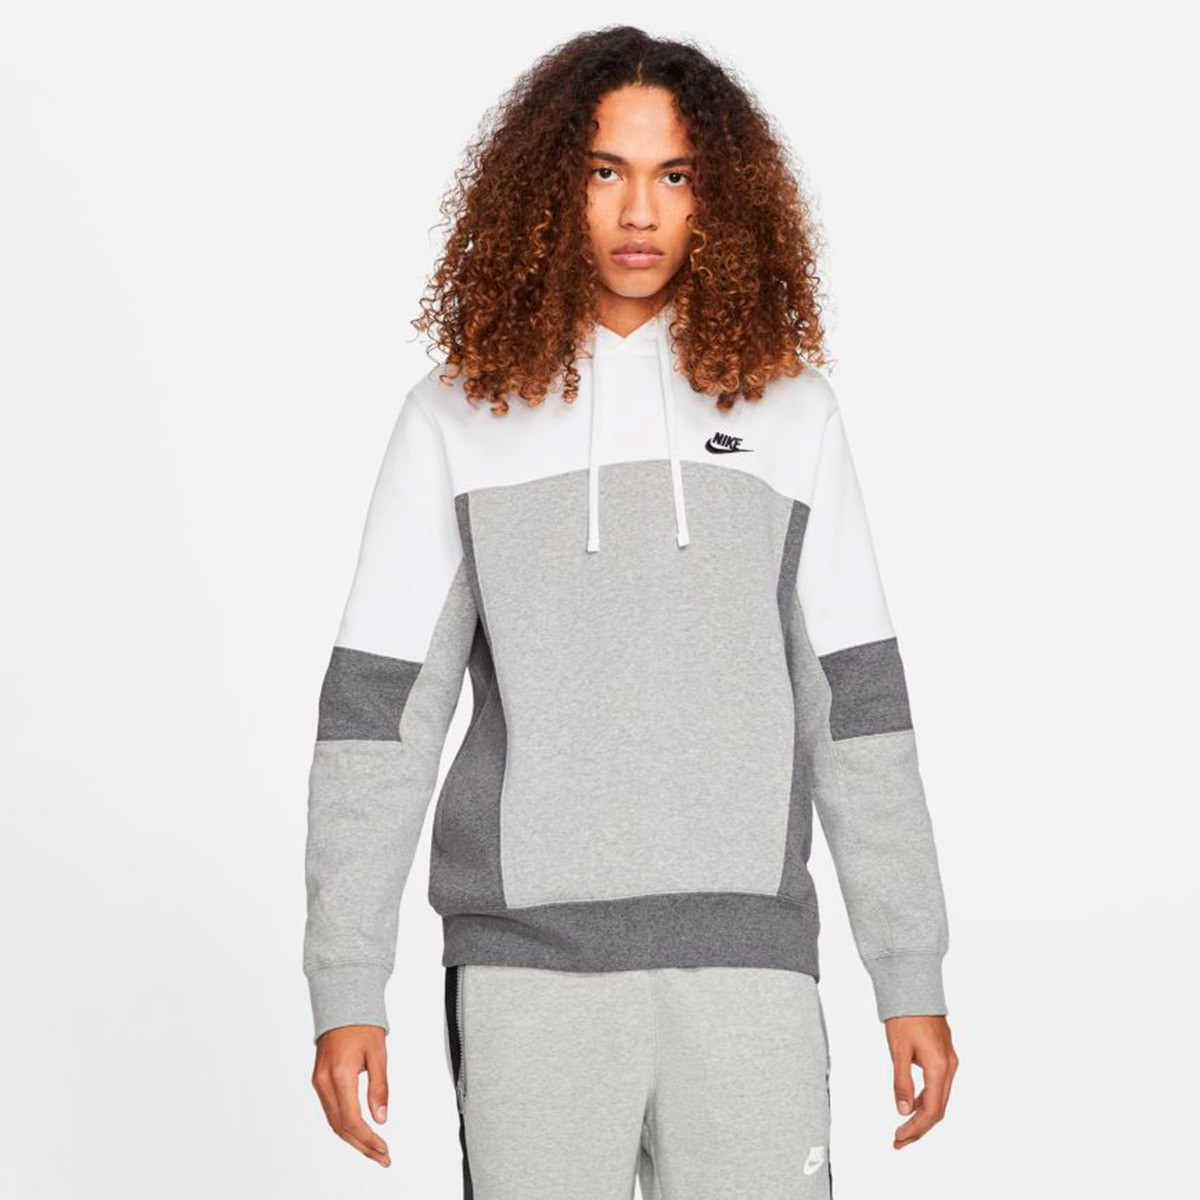 Nike Colorblock Sweatshirt Discount, 52% OFF | www